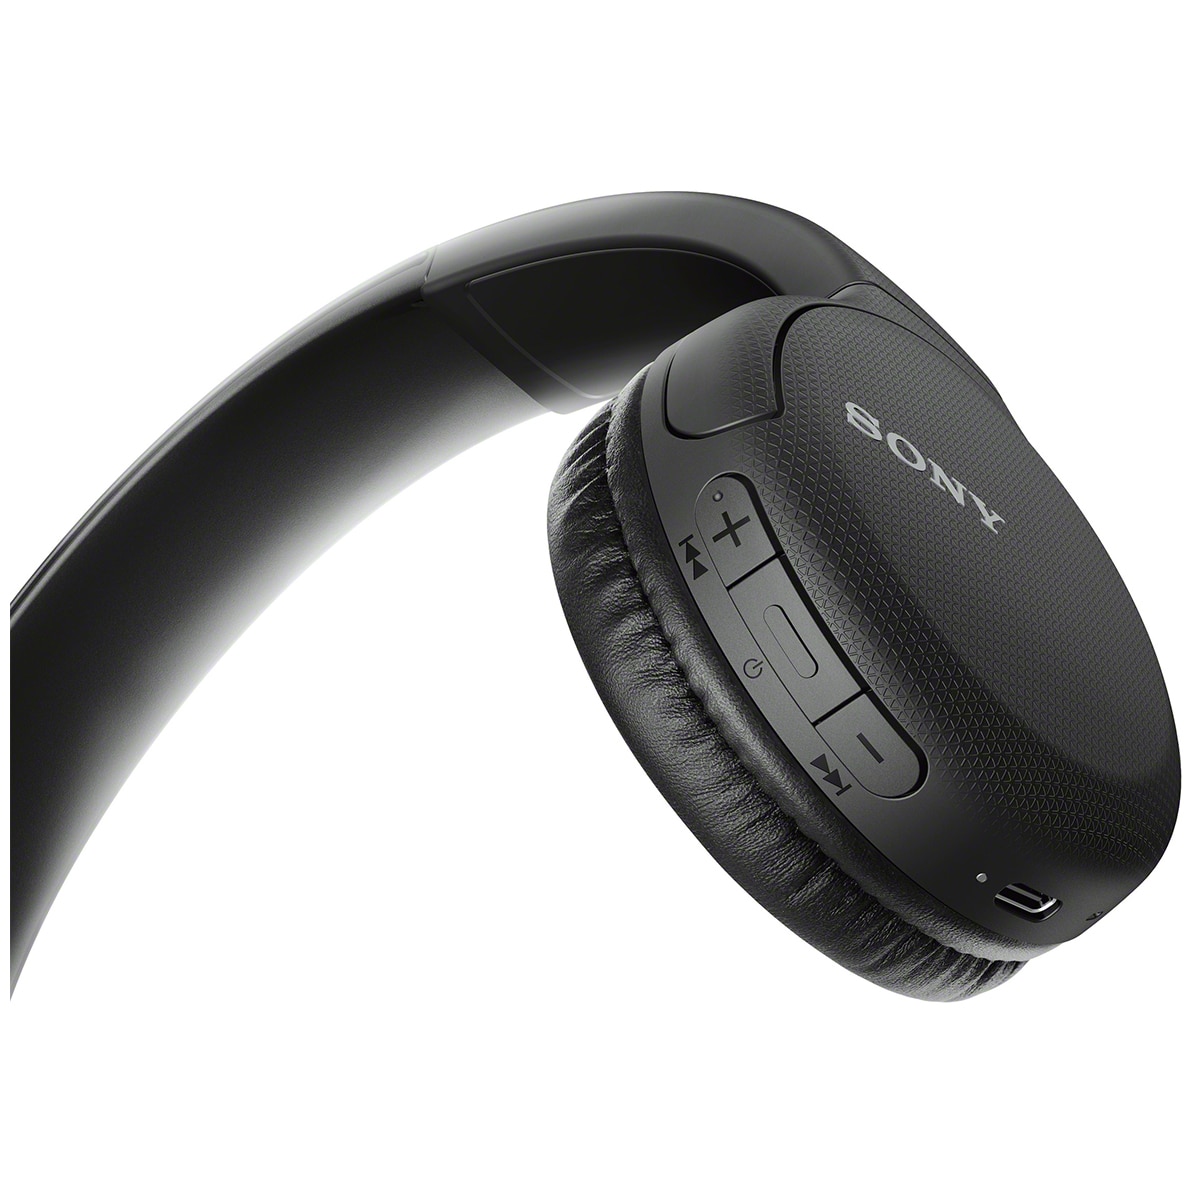 Sony Wireless Headphones WHCH510B